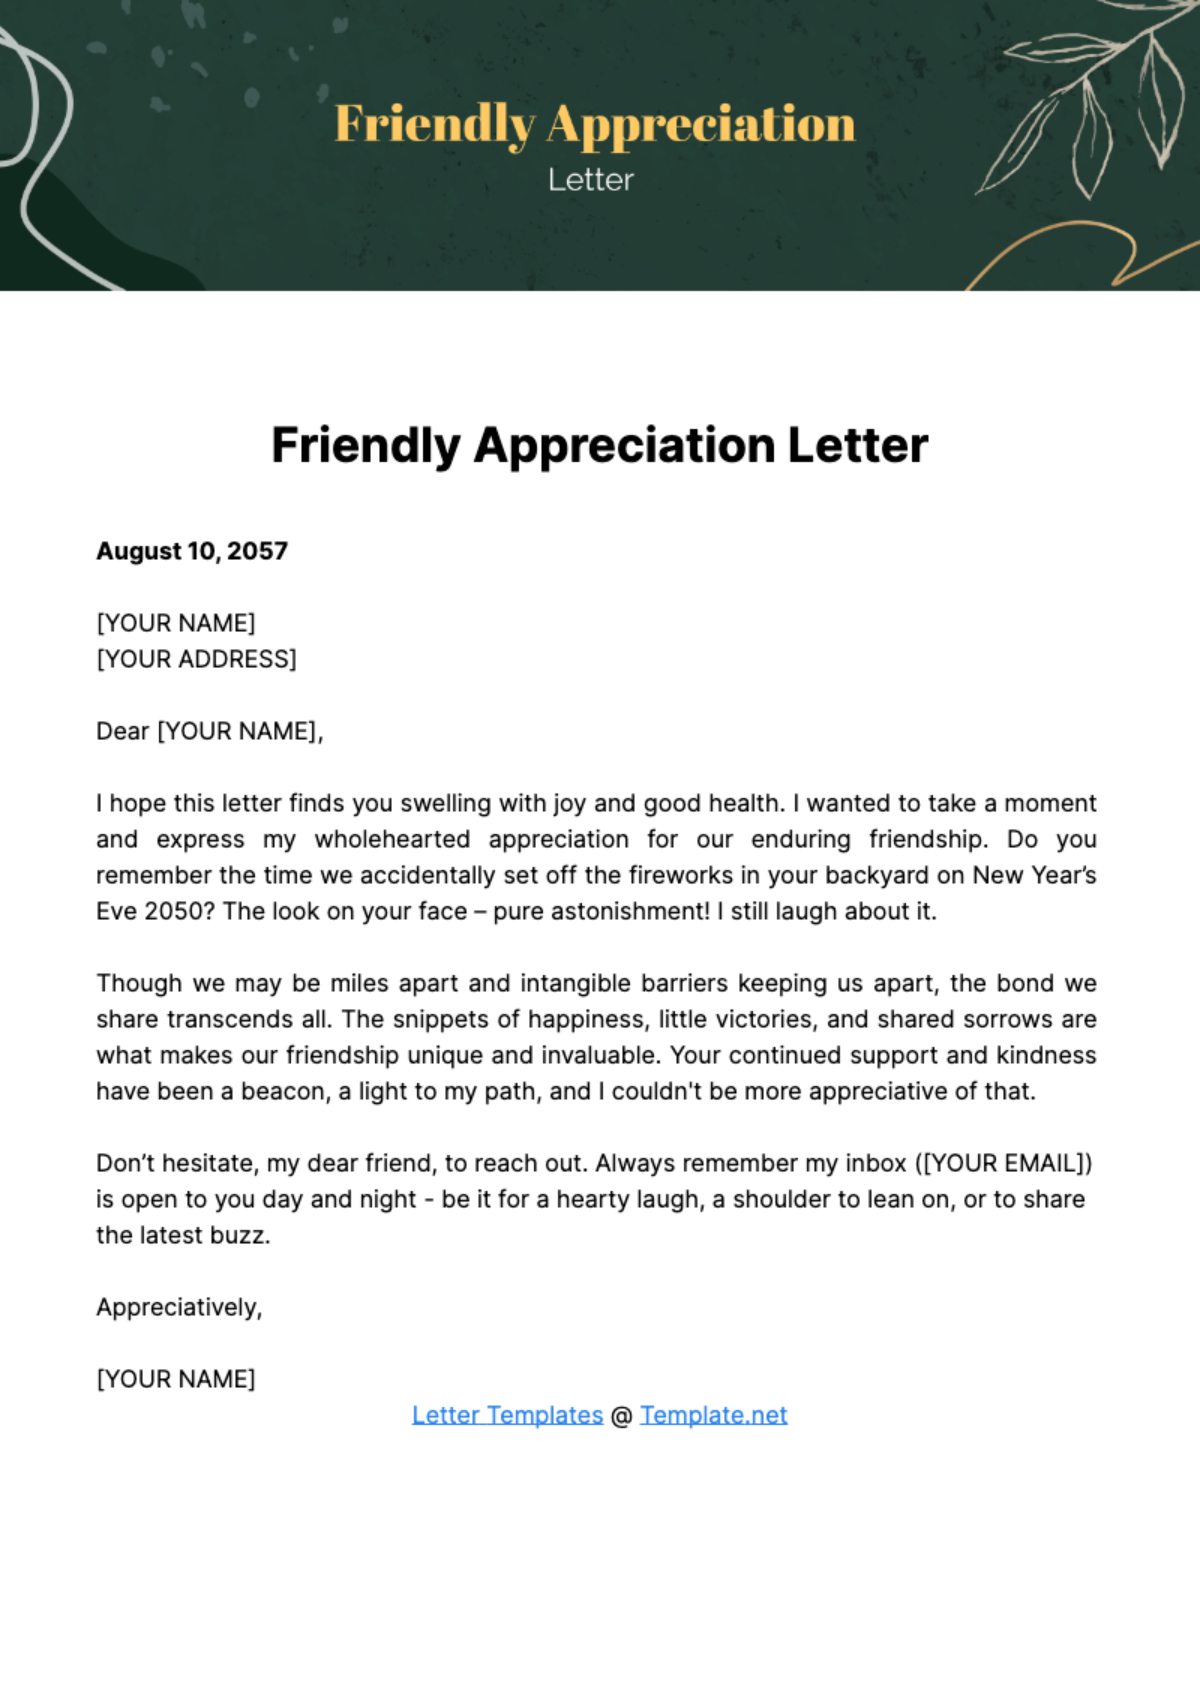 Friendly Appreciation Letter Template